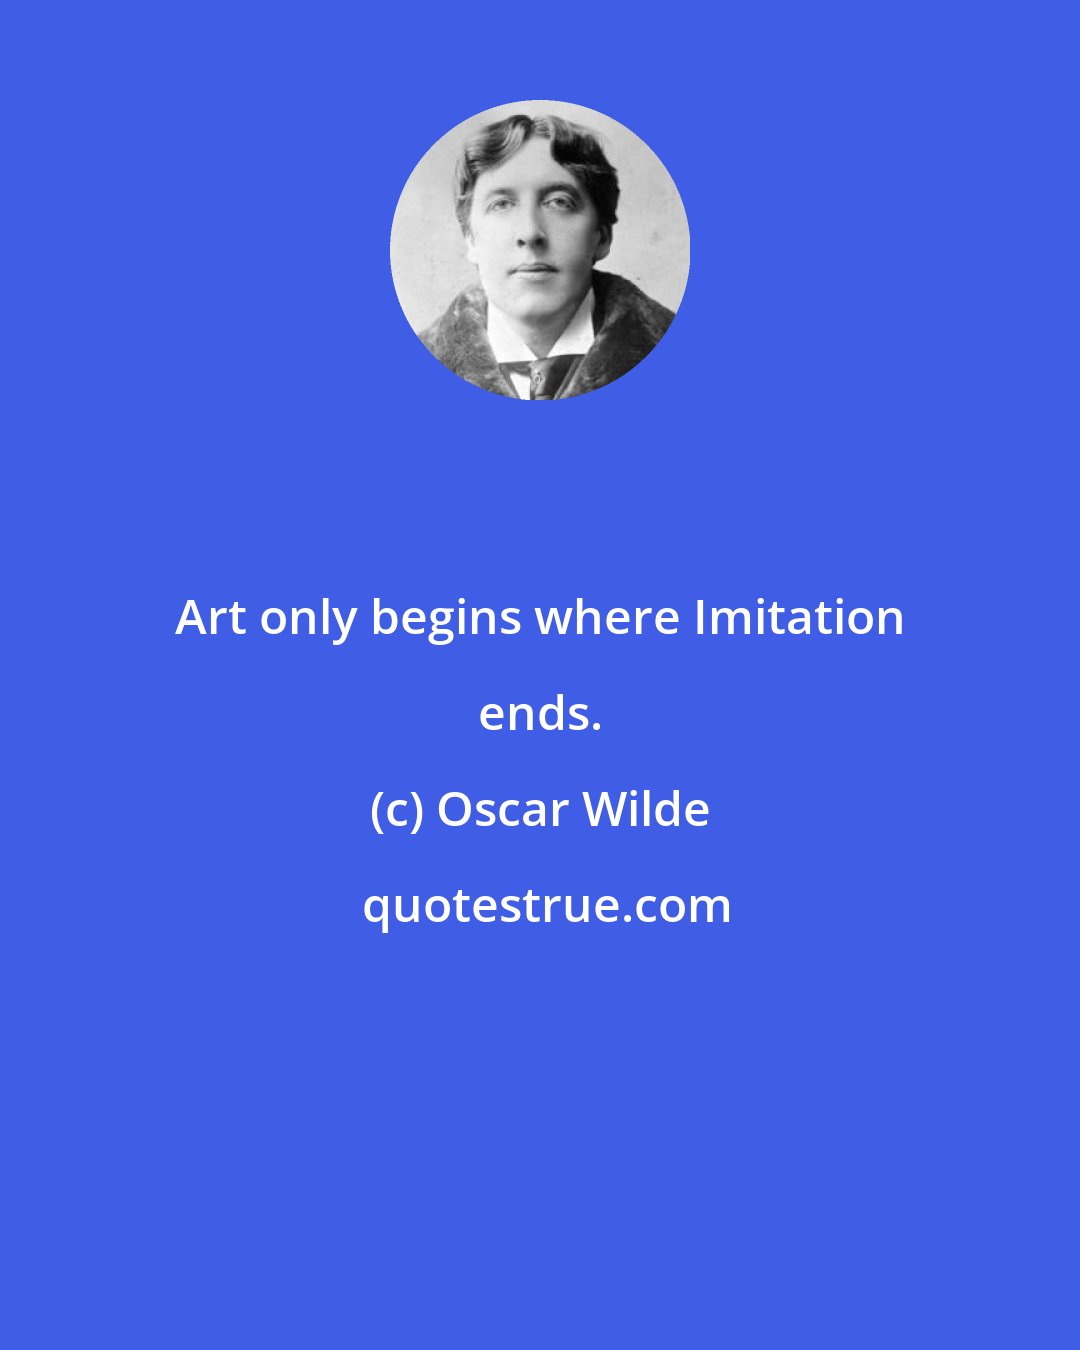 Oscar Wilde: Art only begins where Imitation ends.